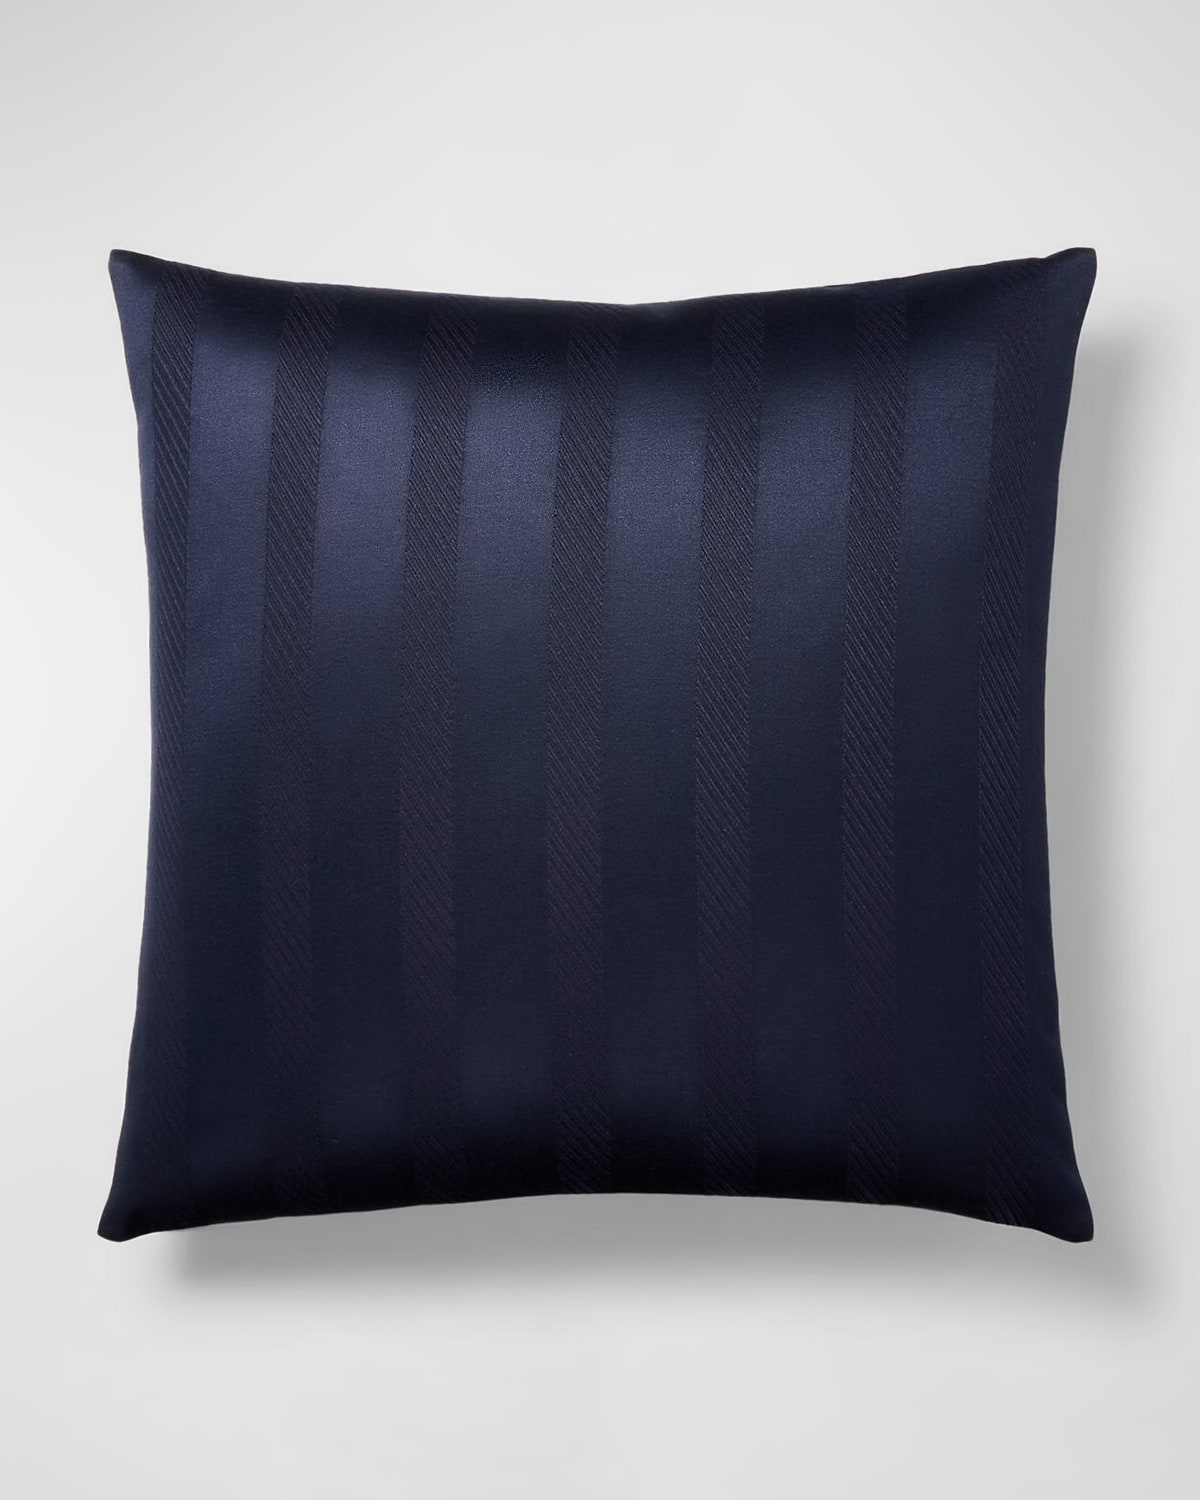 Ralph Lauren Schroder Decorative Pillow, 20" Square In Blue